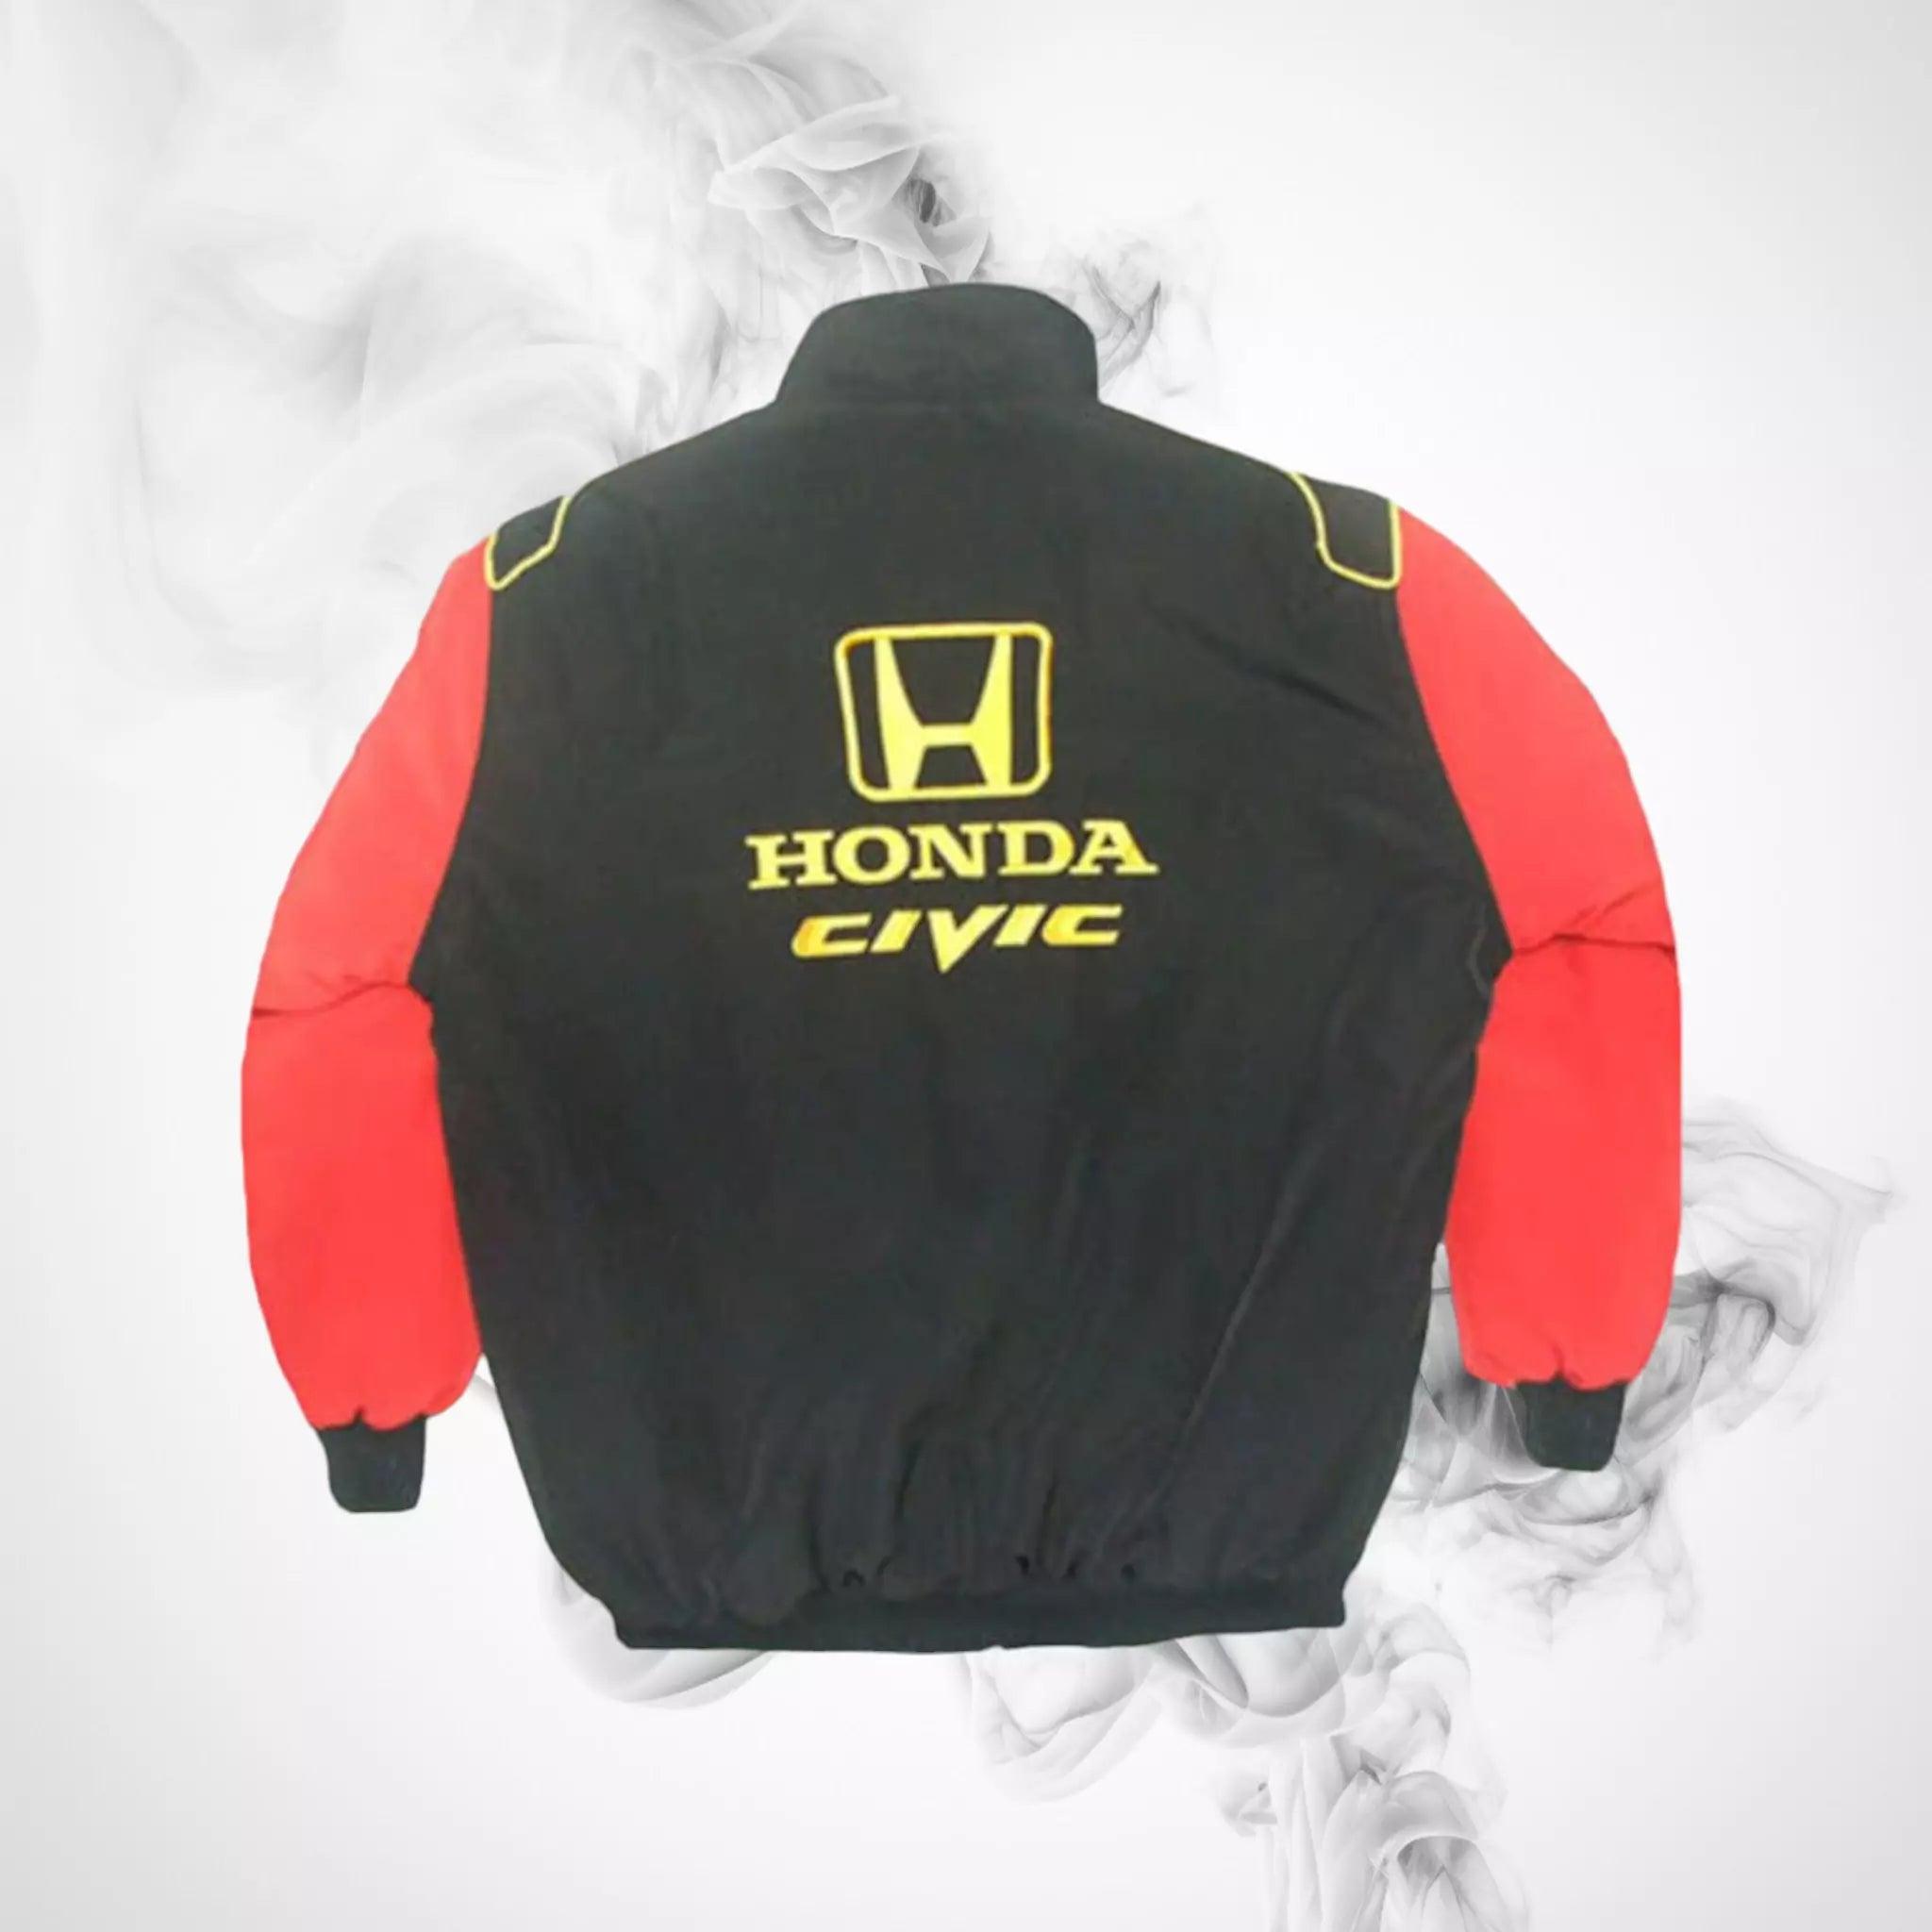 Honda Civic Racing Jacket Black and Red NASCAR jacket - Dash Racegear 